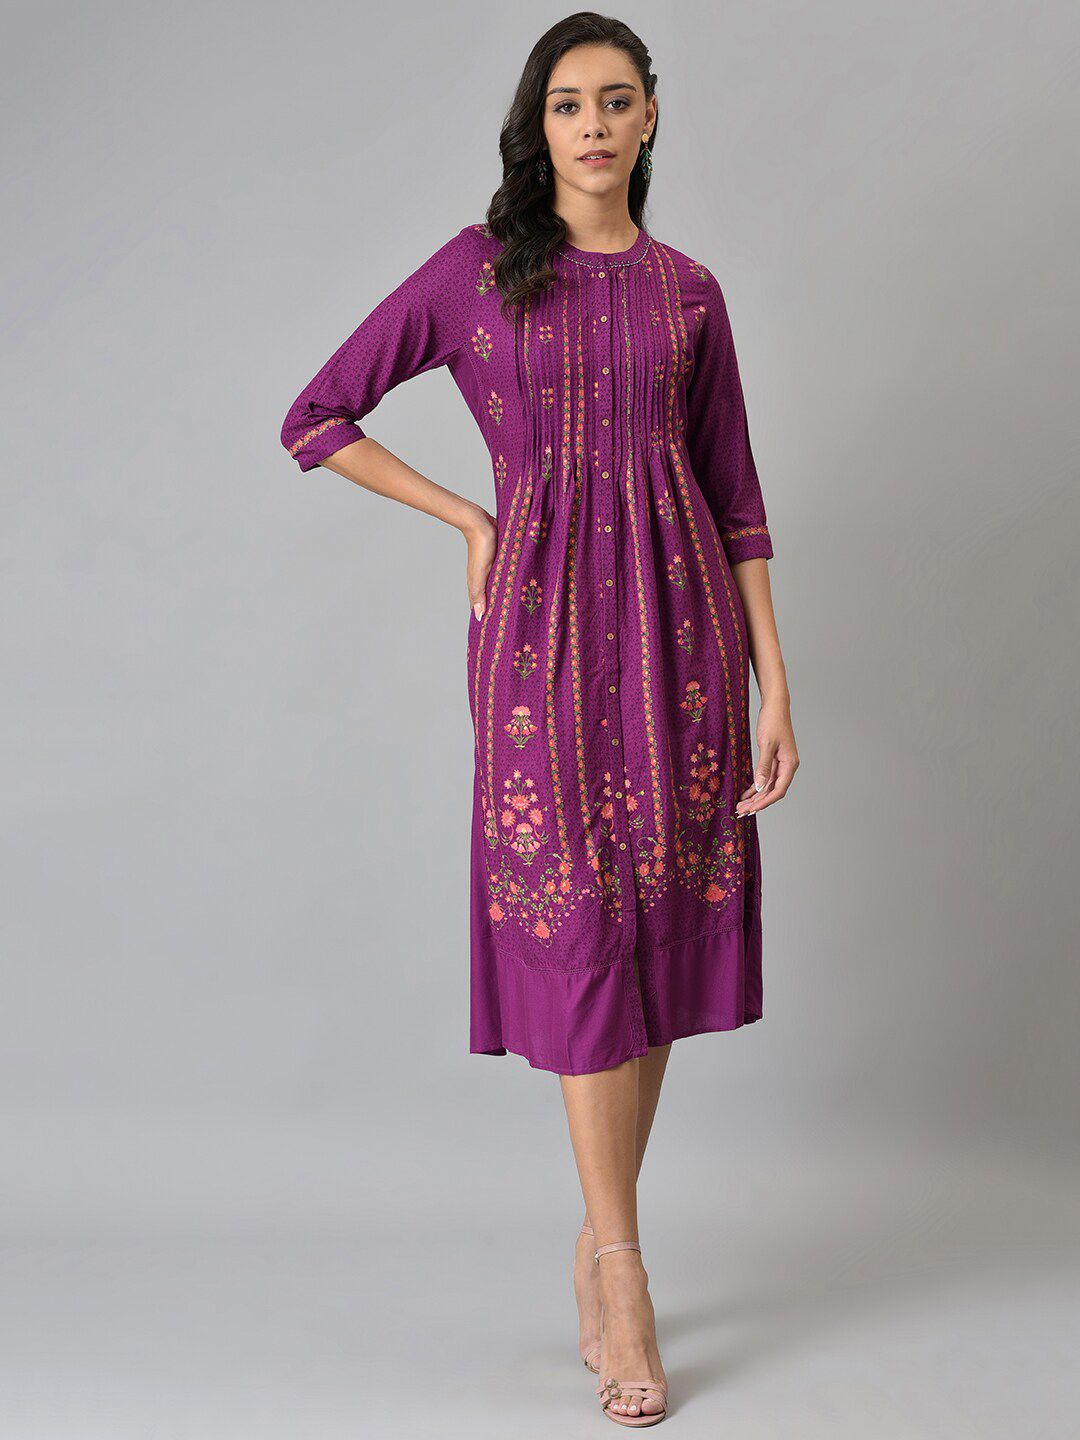 W Purple Ethnic Motifs Chiffon Ethnic A-Line Midi Dress Price in India